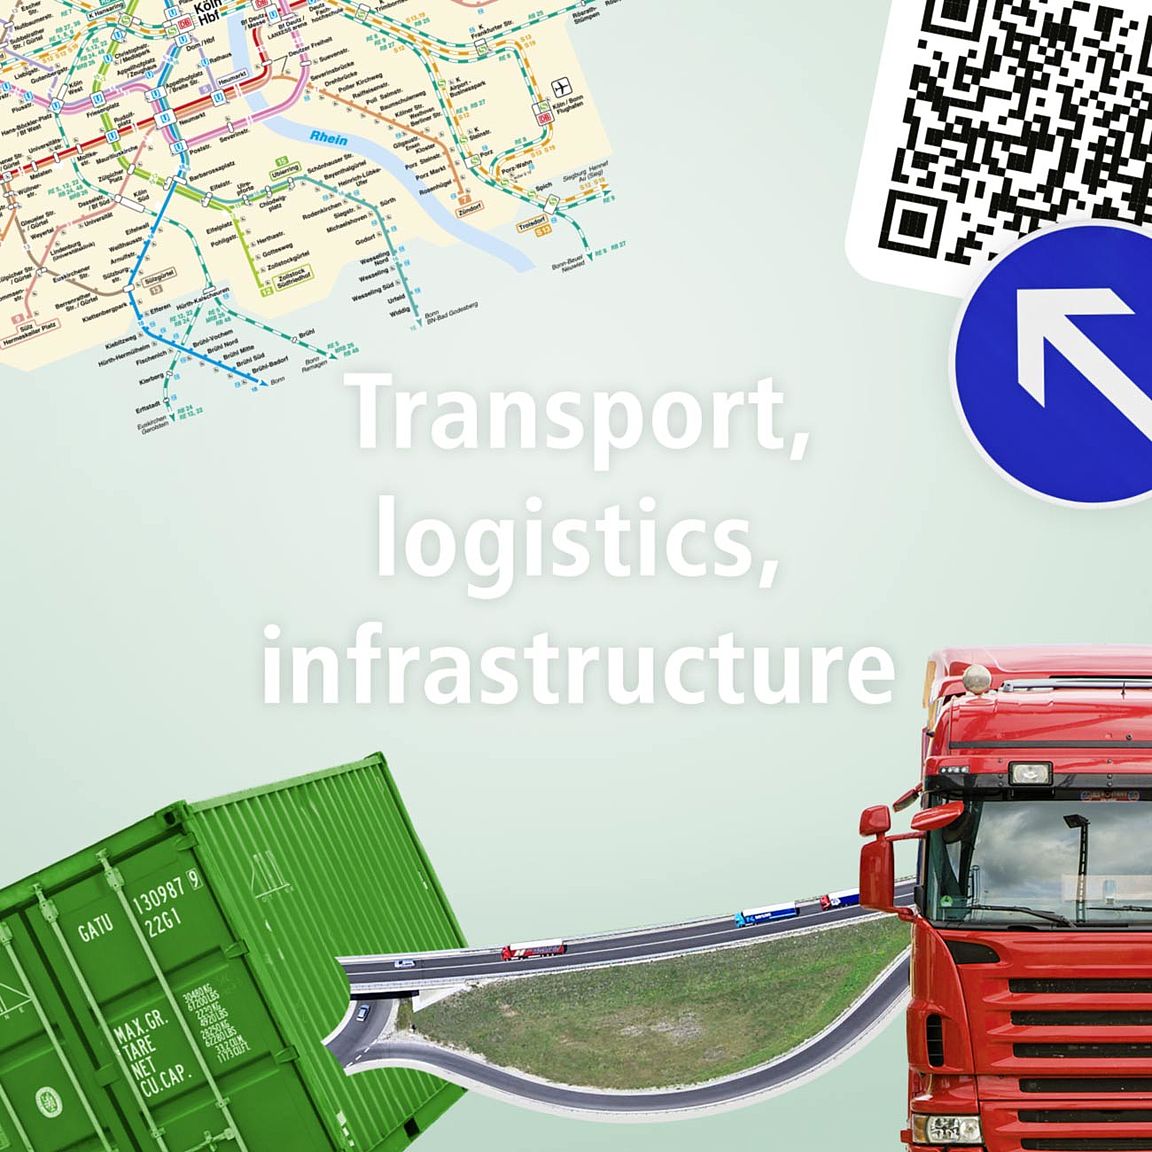 Transport, logistics, infrastructure